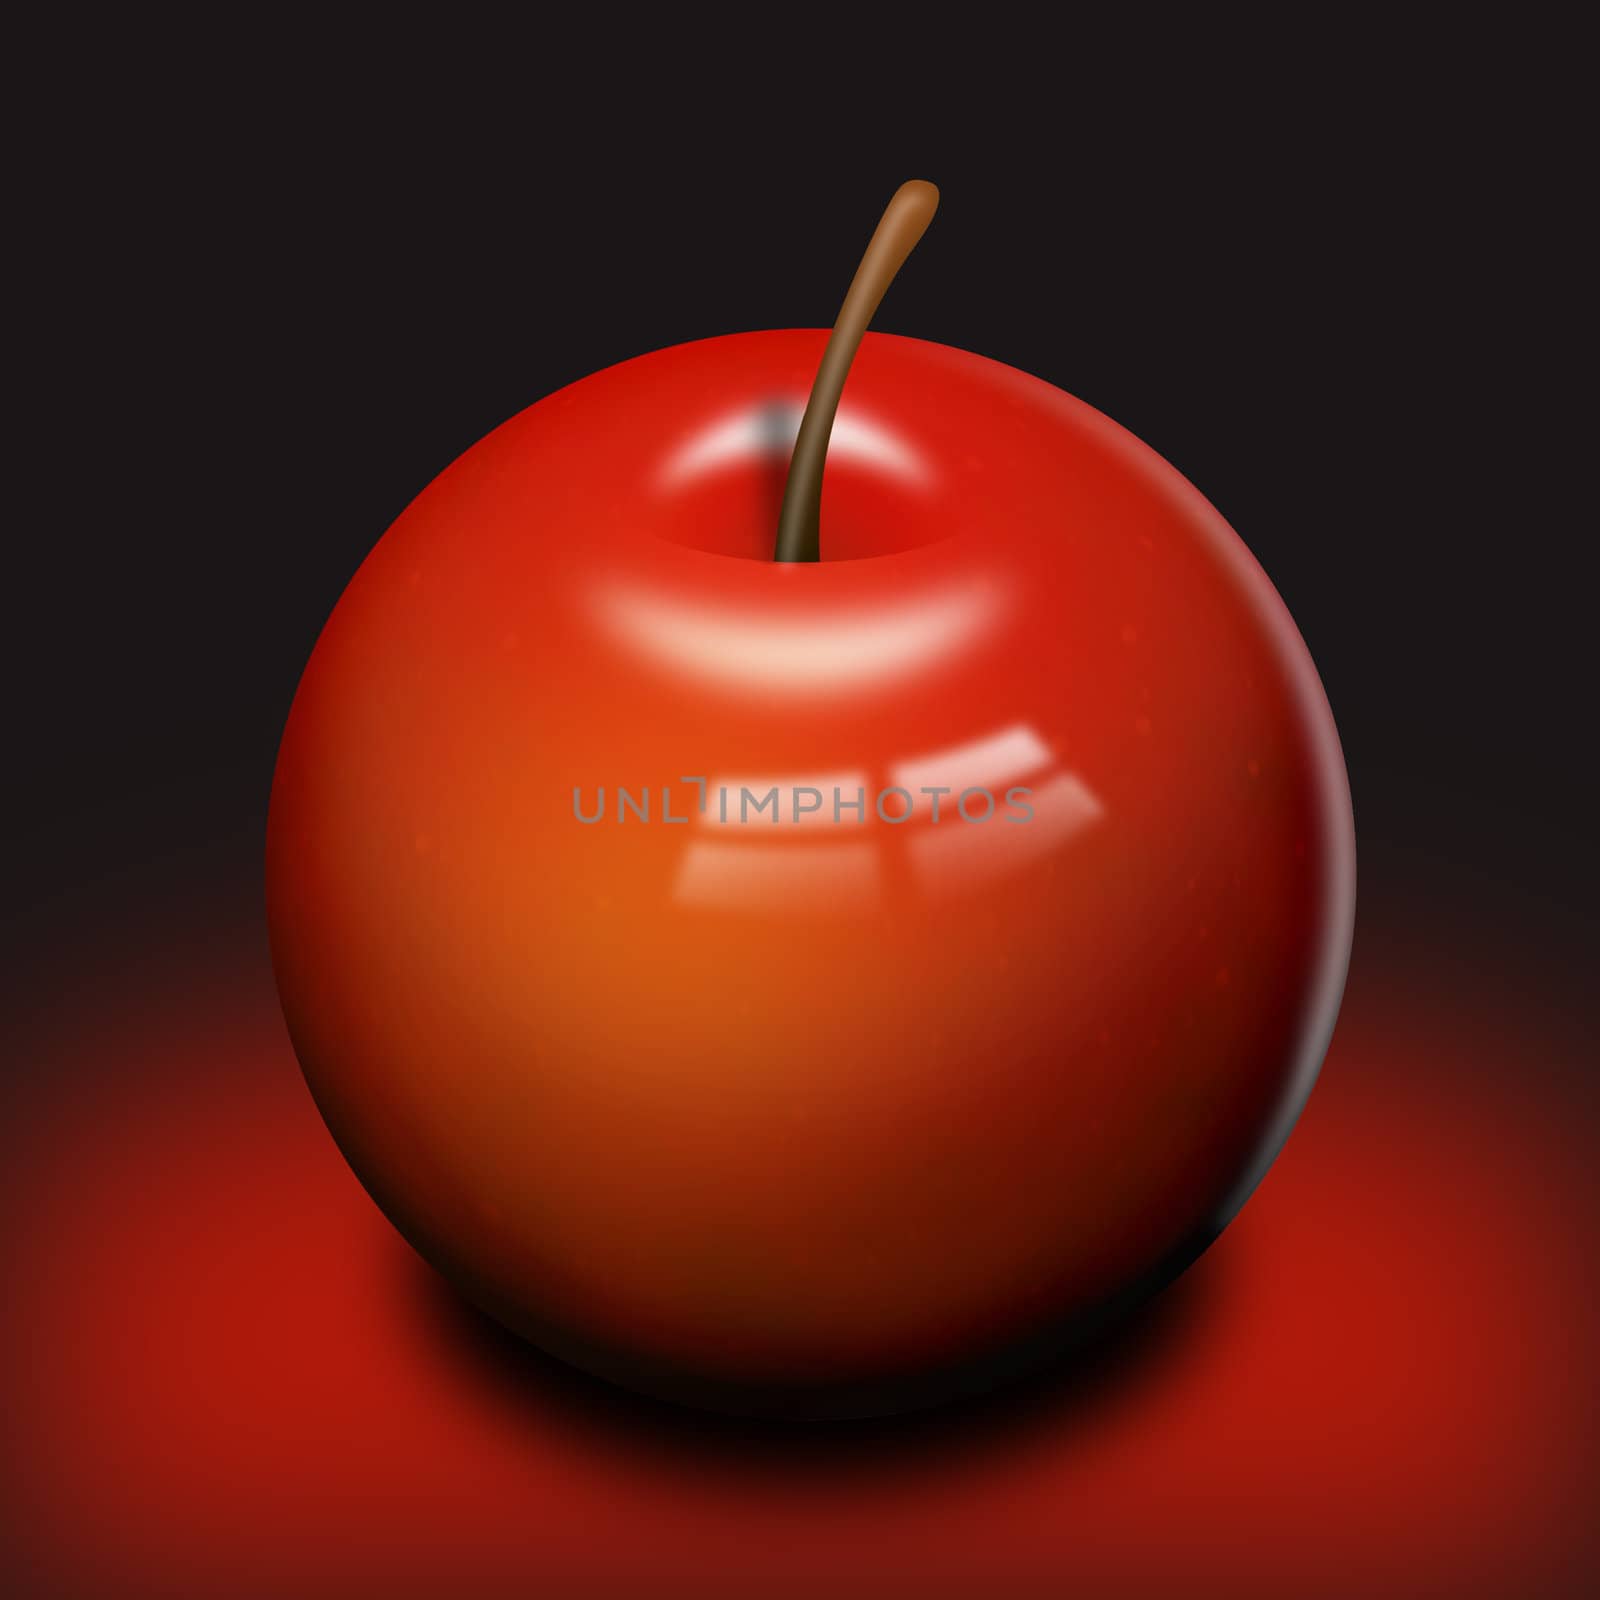 Illustration of a good red apple fruit